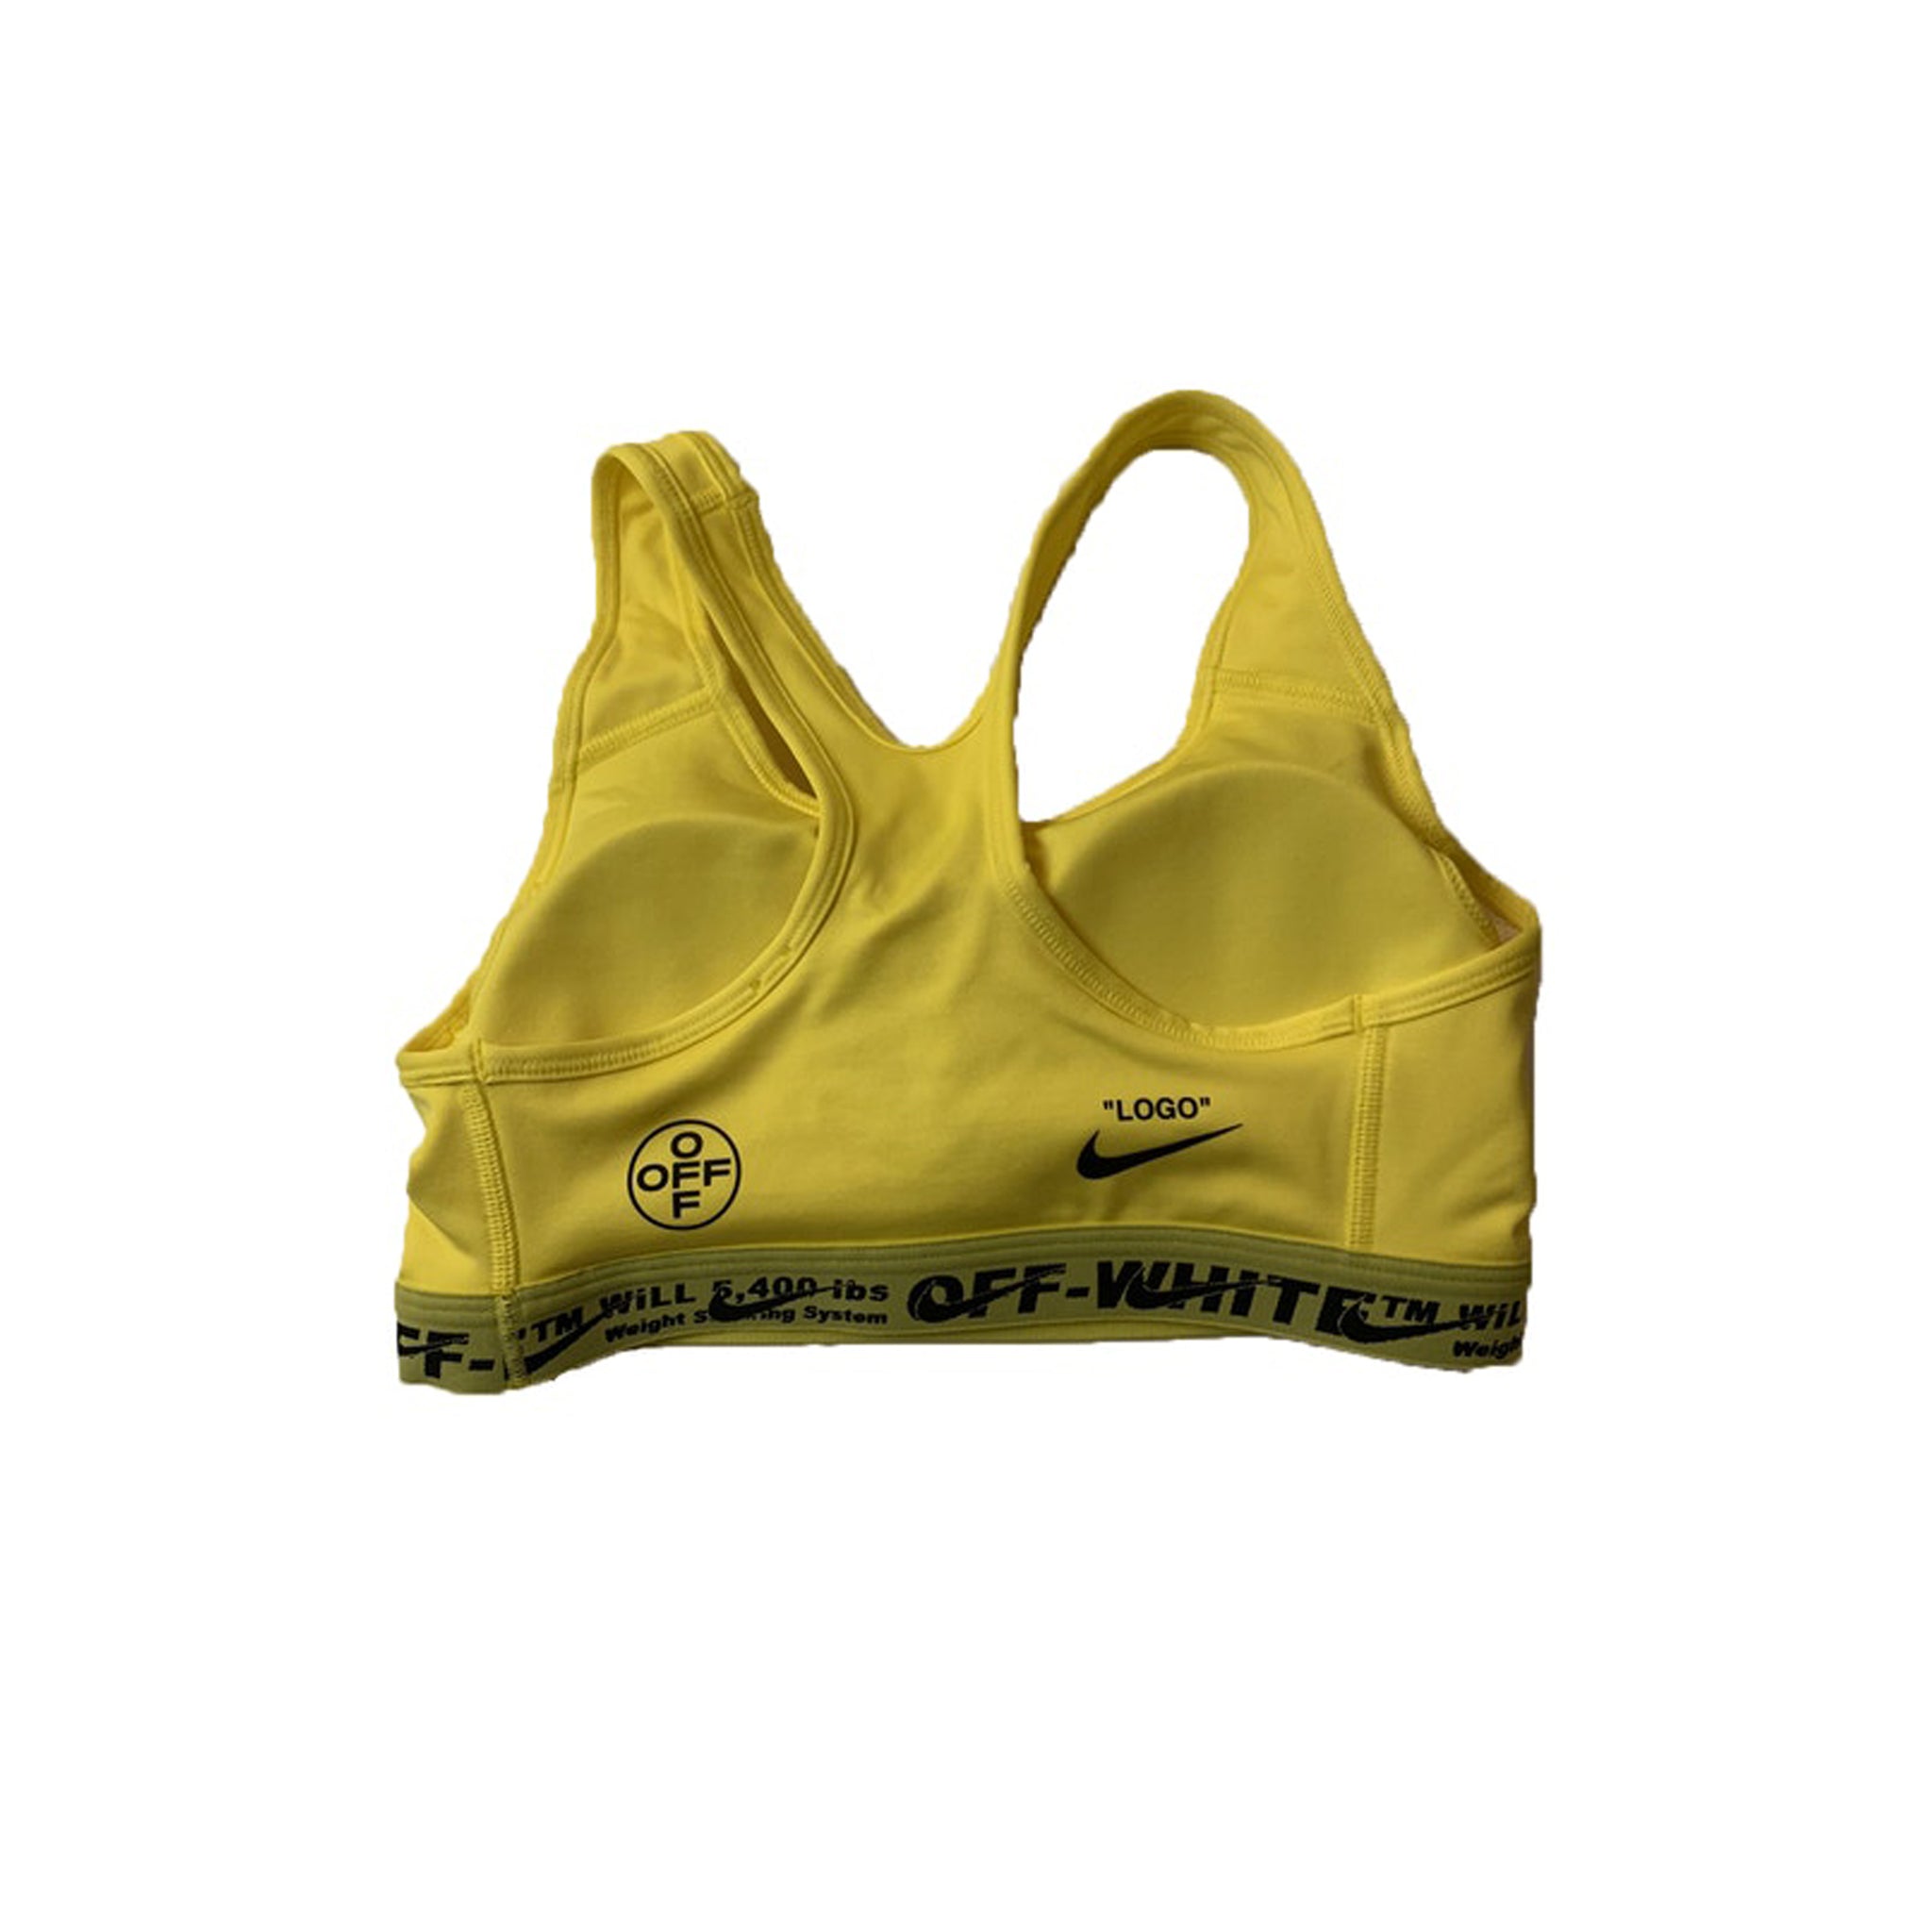 off white yellow sports bra